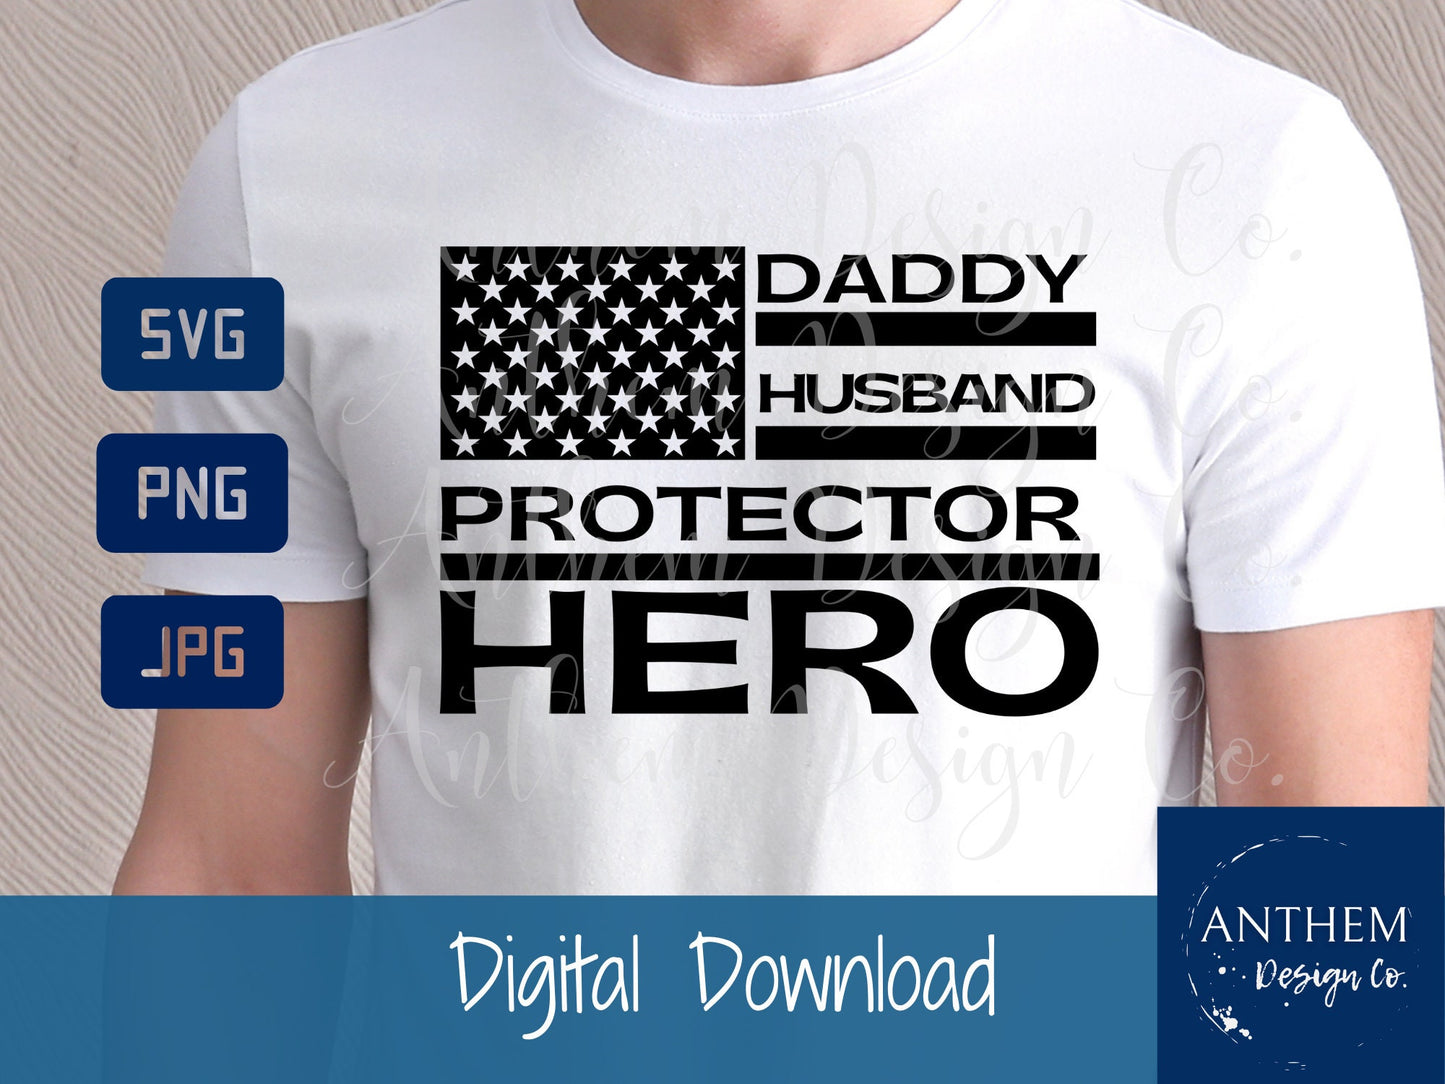 Daddy Husband Protector Hero SvG, fathers day, Military dad svg, Dad, patriot dad, American dad svg, veteran dad, Cricut, silhouette